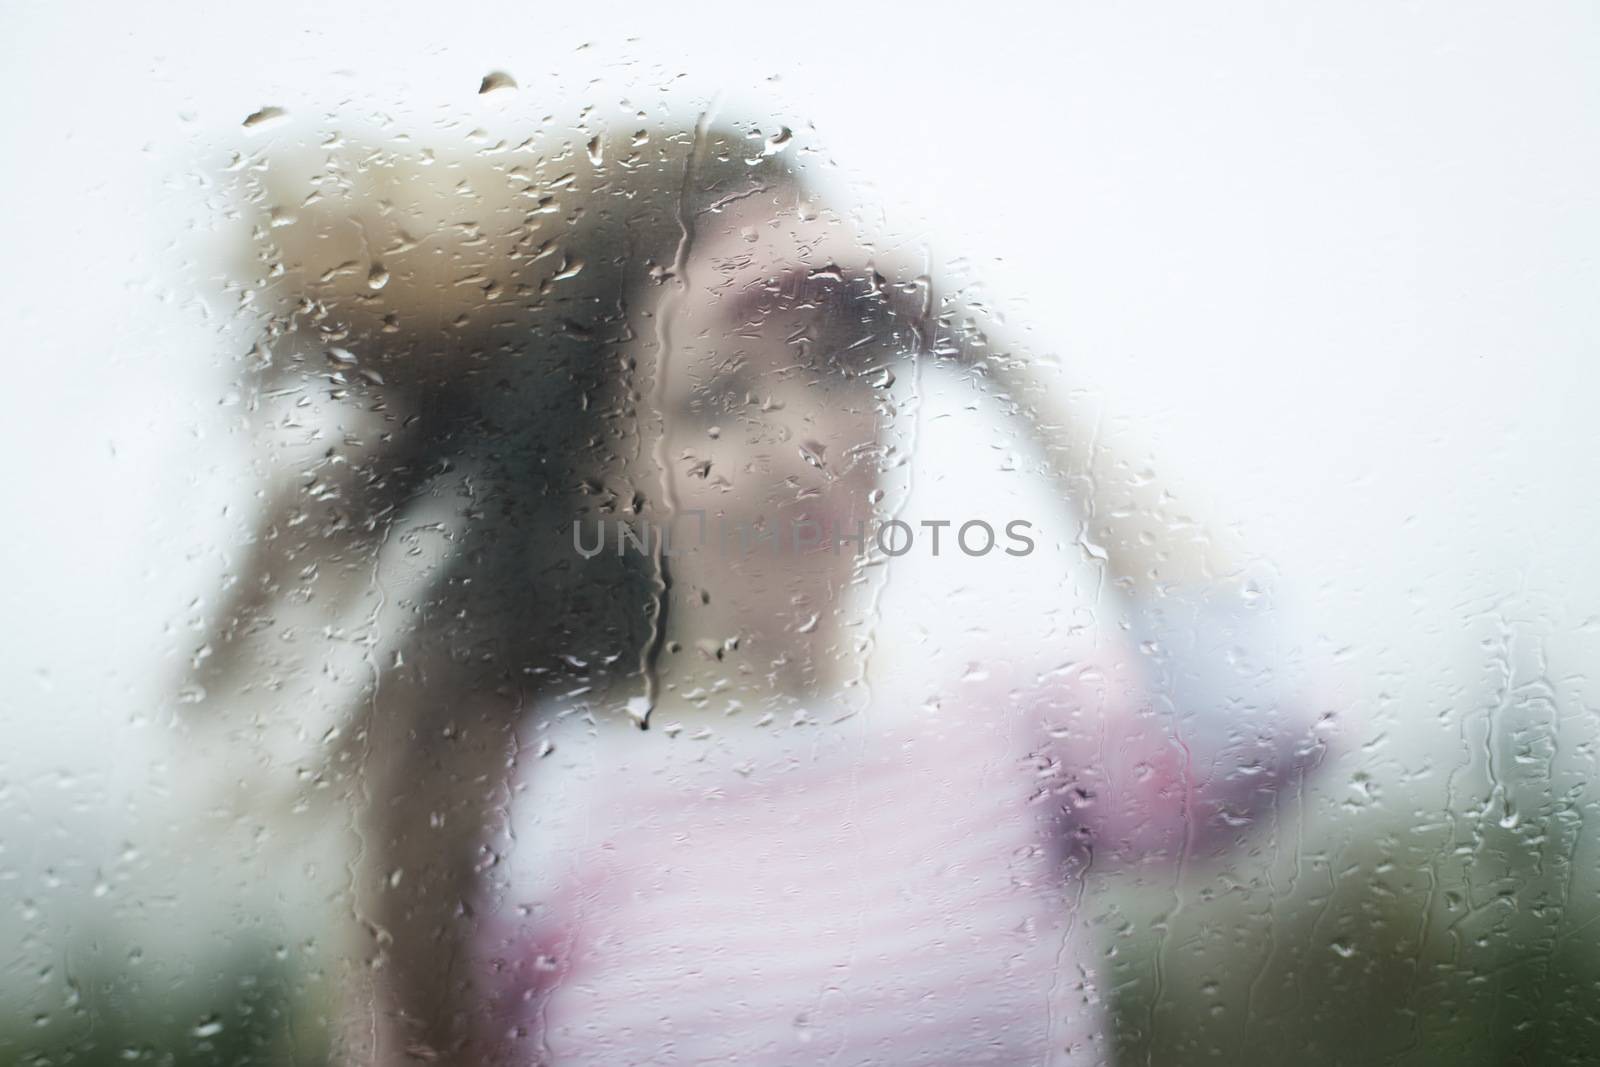 Blurry image of a woman through a rainy window